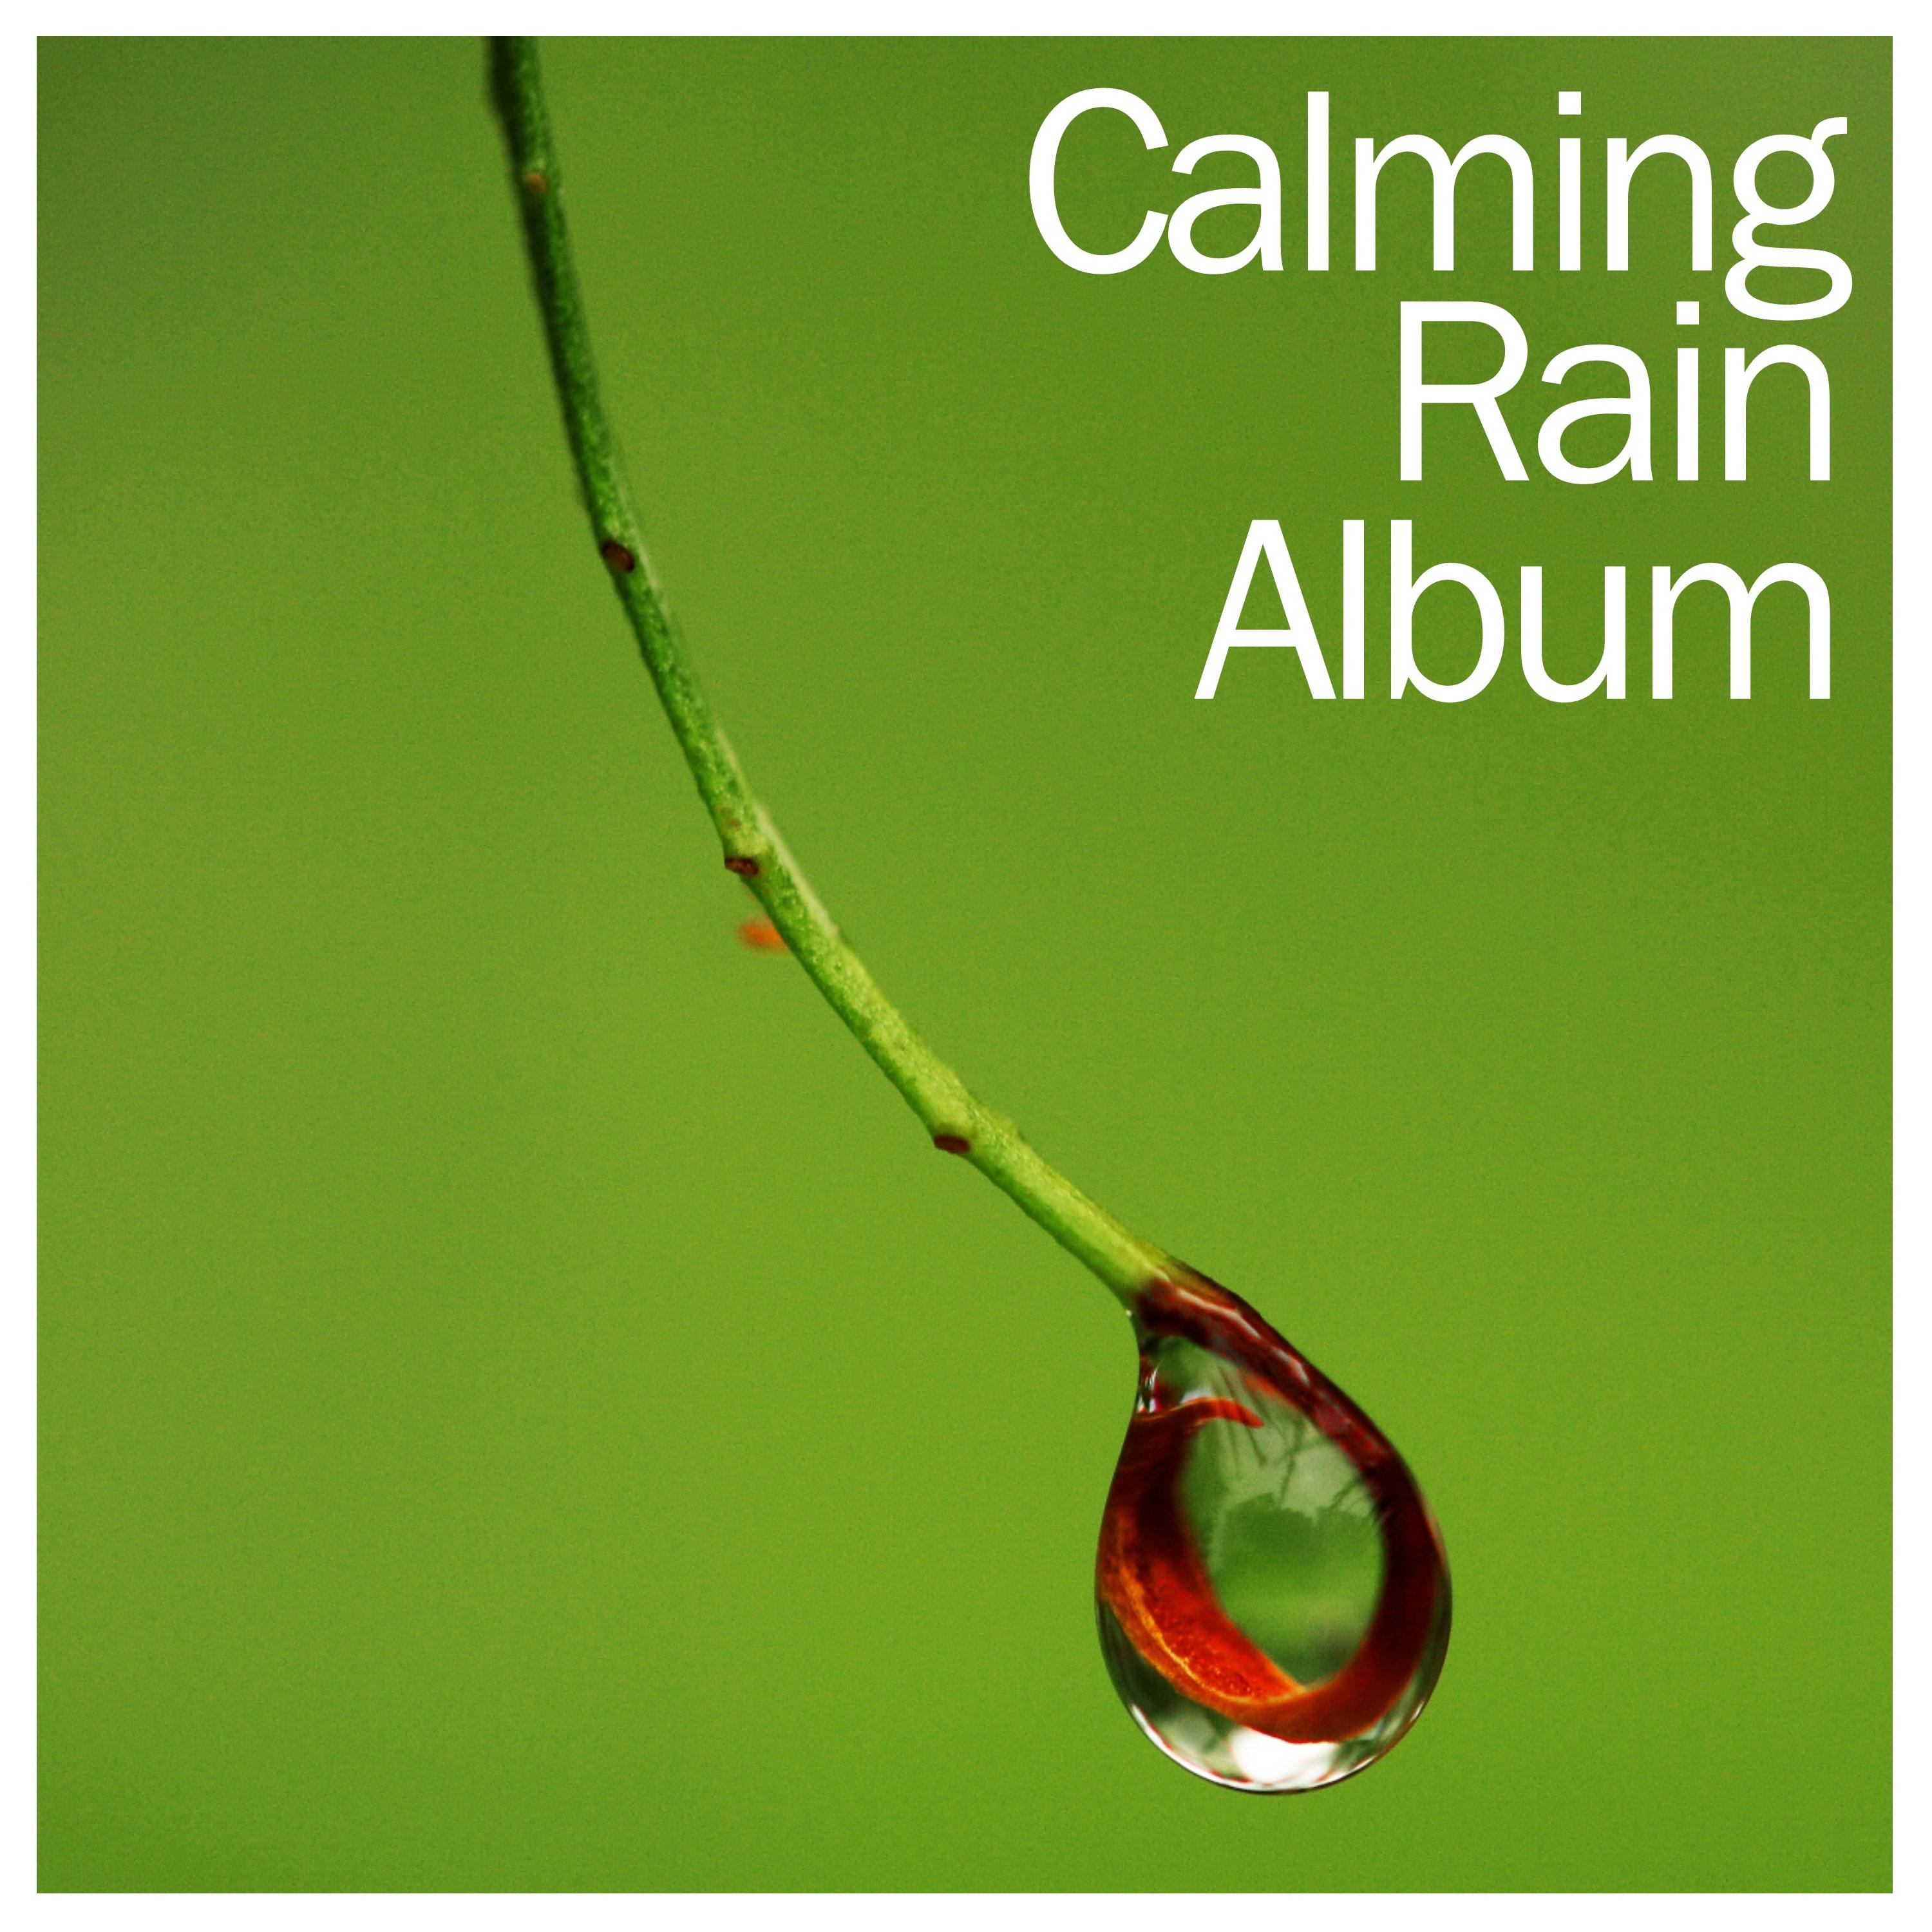 18 New Calming Rain Sounds